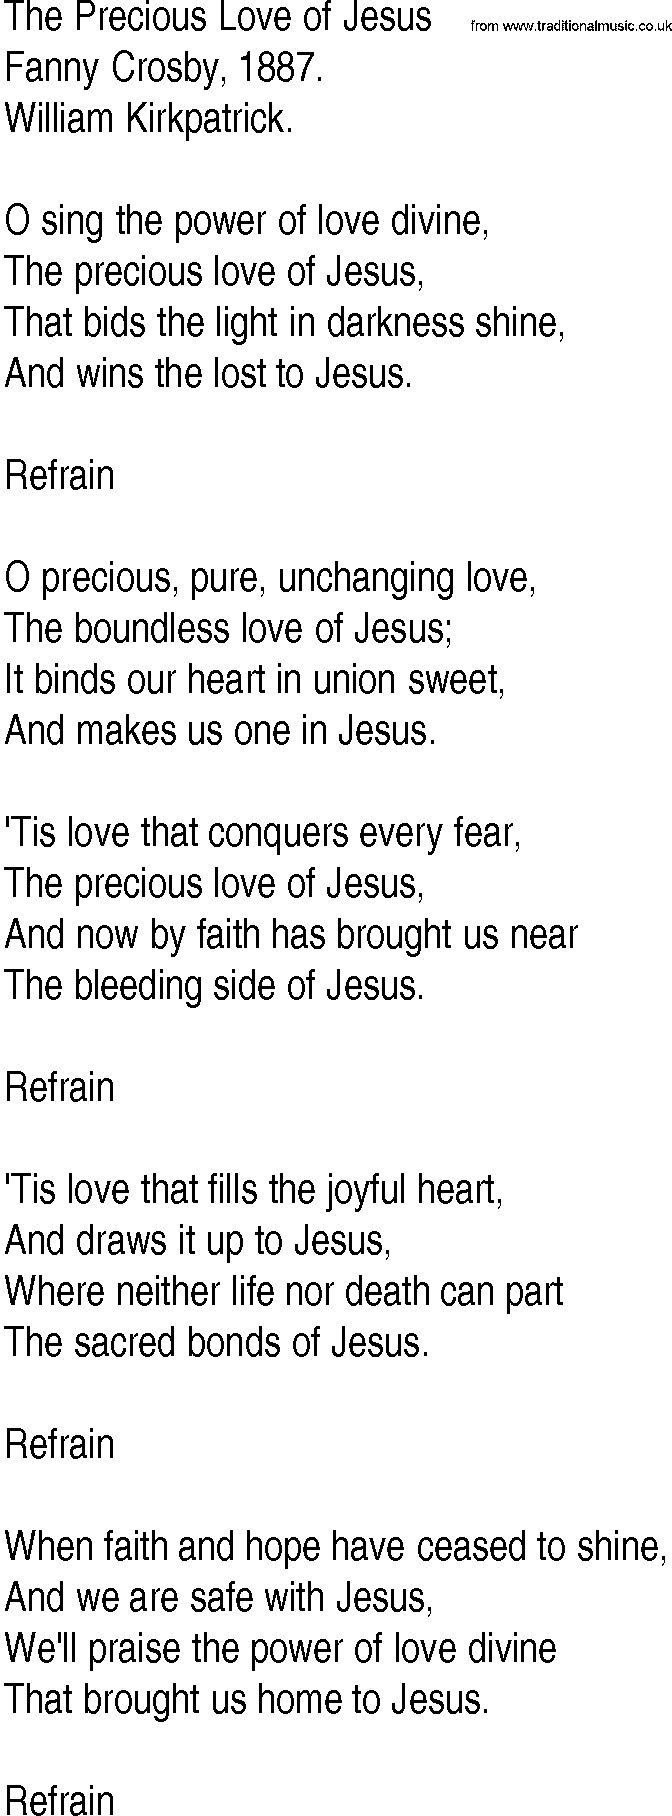 Hymn and Gospel Song: The Precious Love of Jesus by Fanny Crosby lyrics